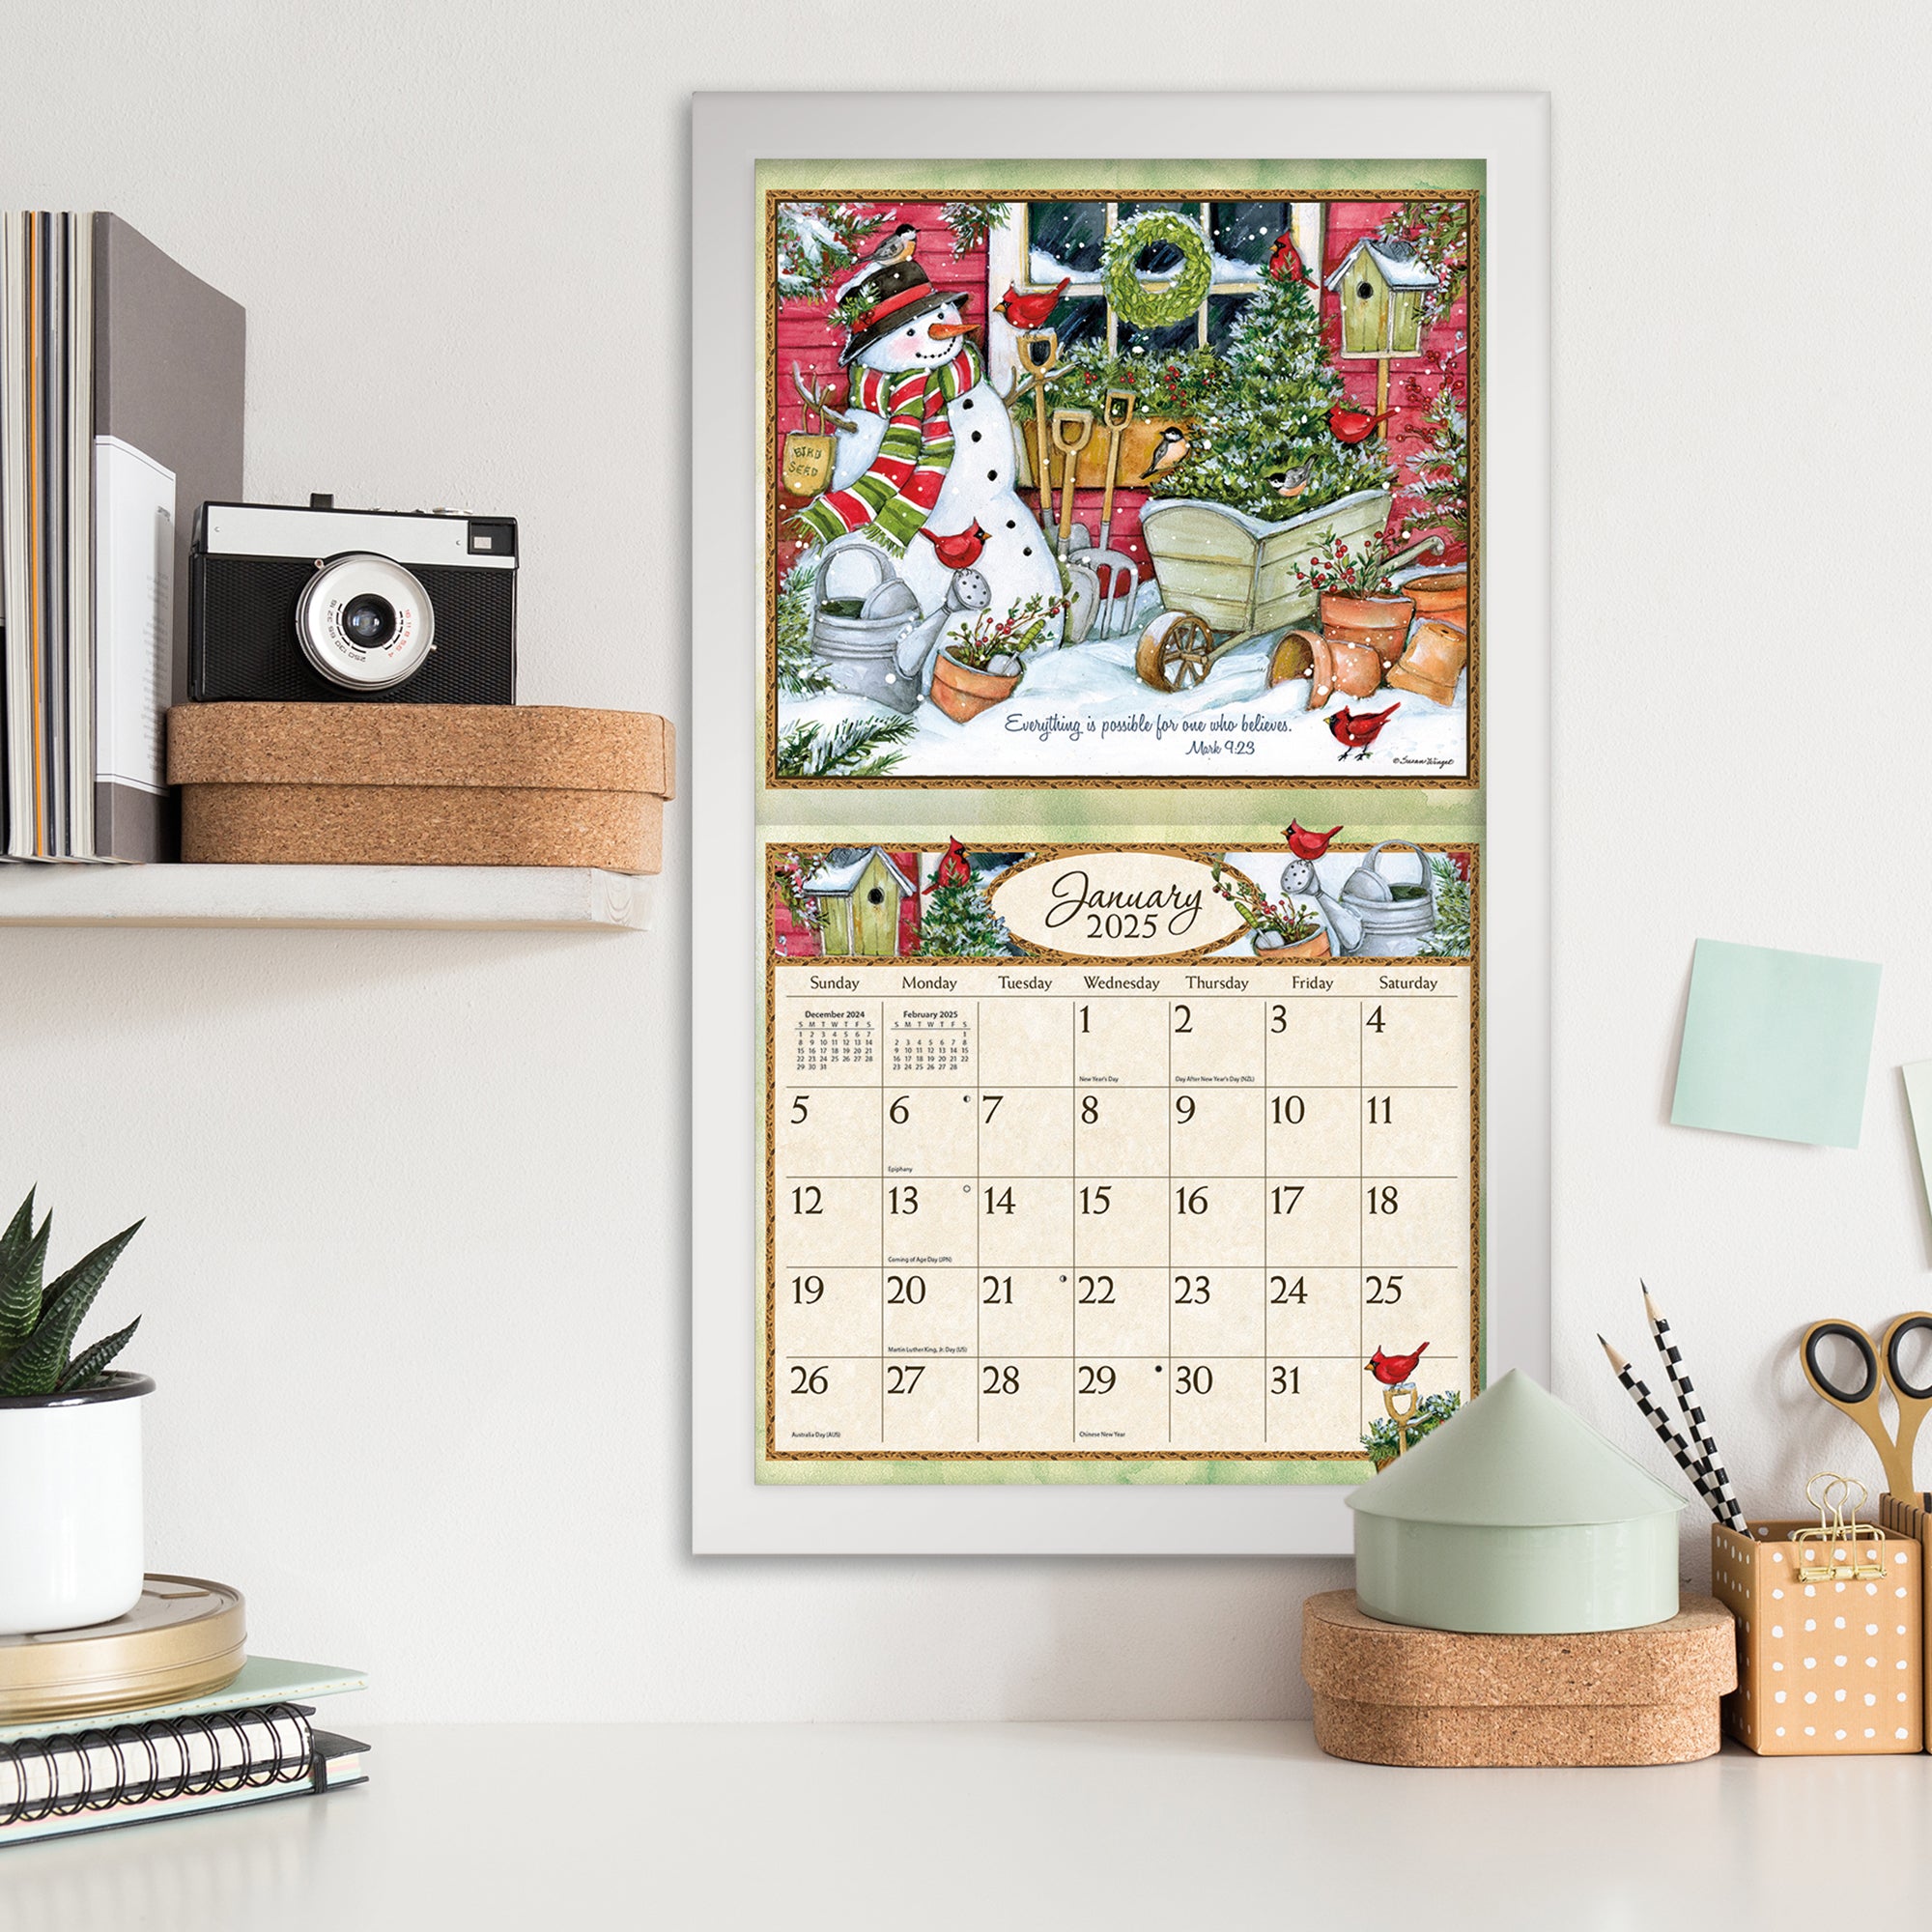 2025 Bountiful Blessings By Susan Winget - LANG Deluxe Wall Calendar